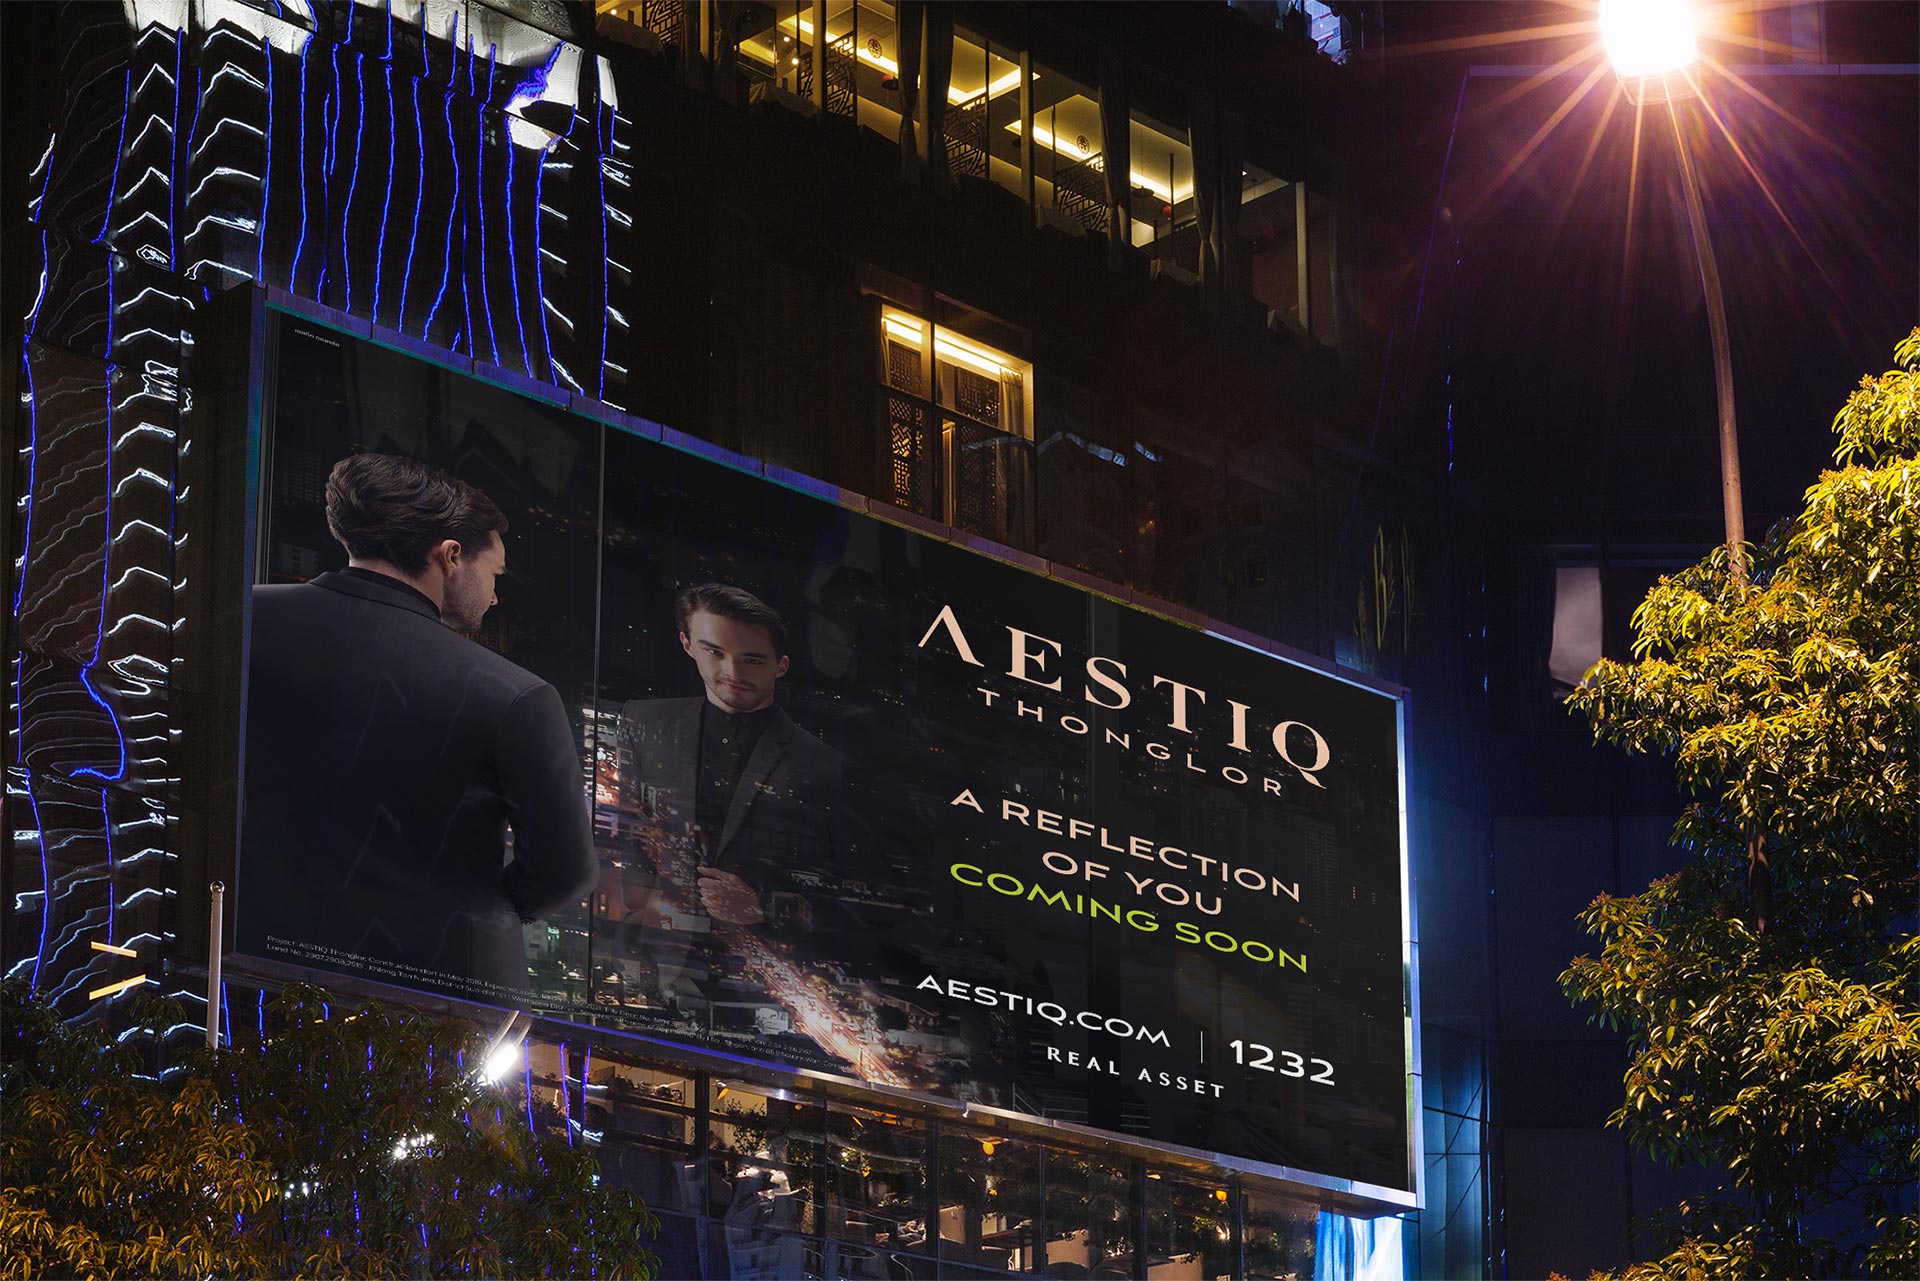 Aestiq - conspiracy creative digital agency